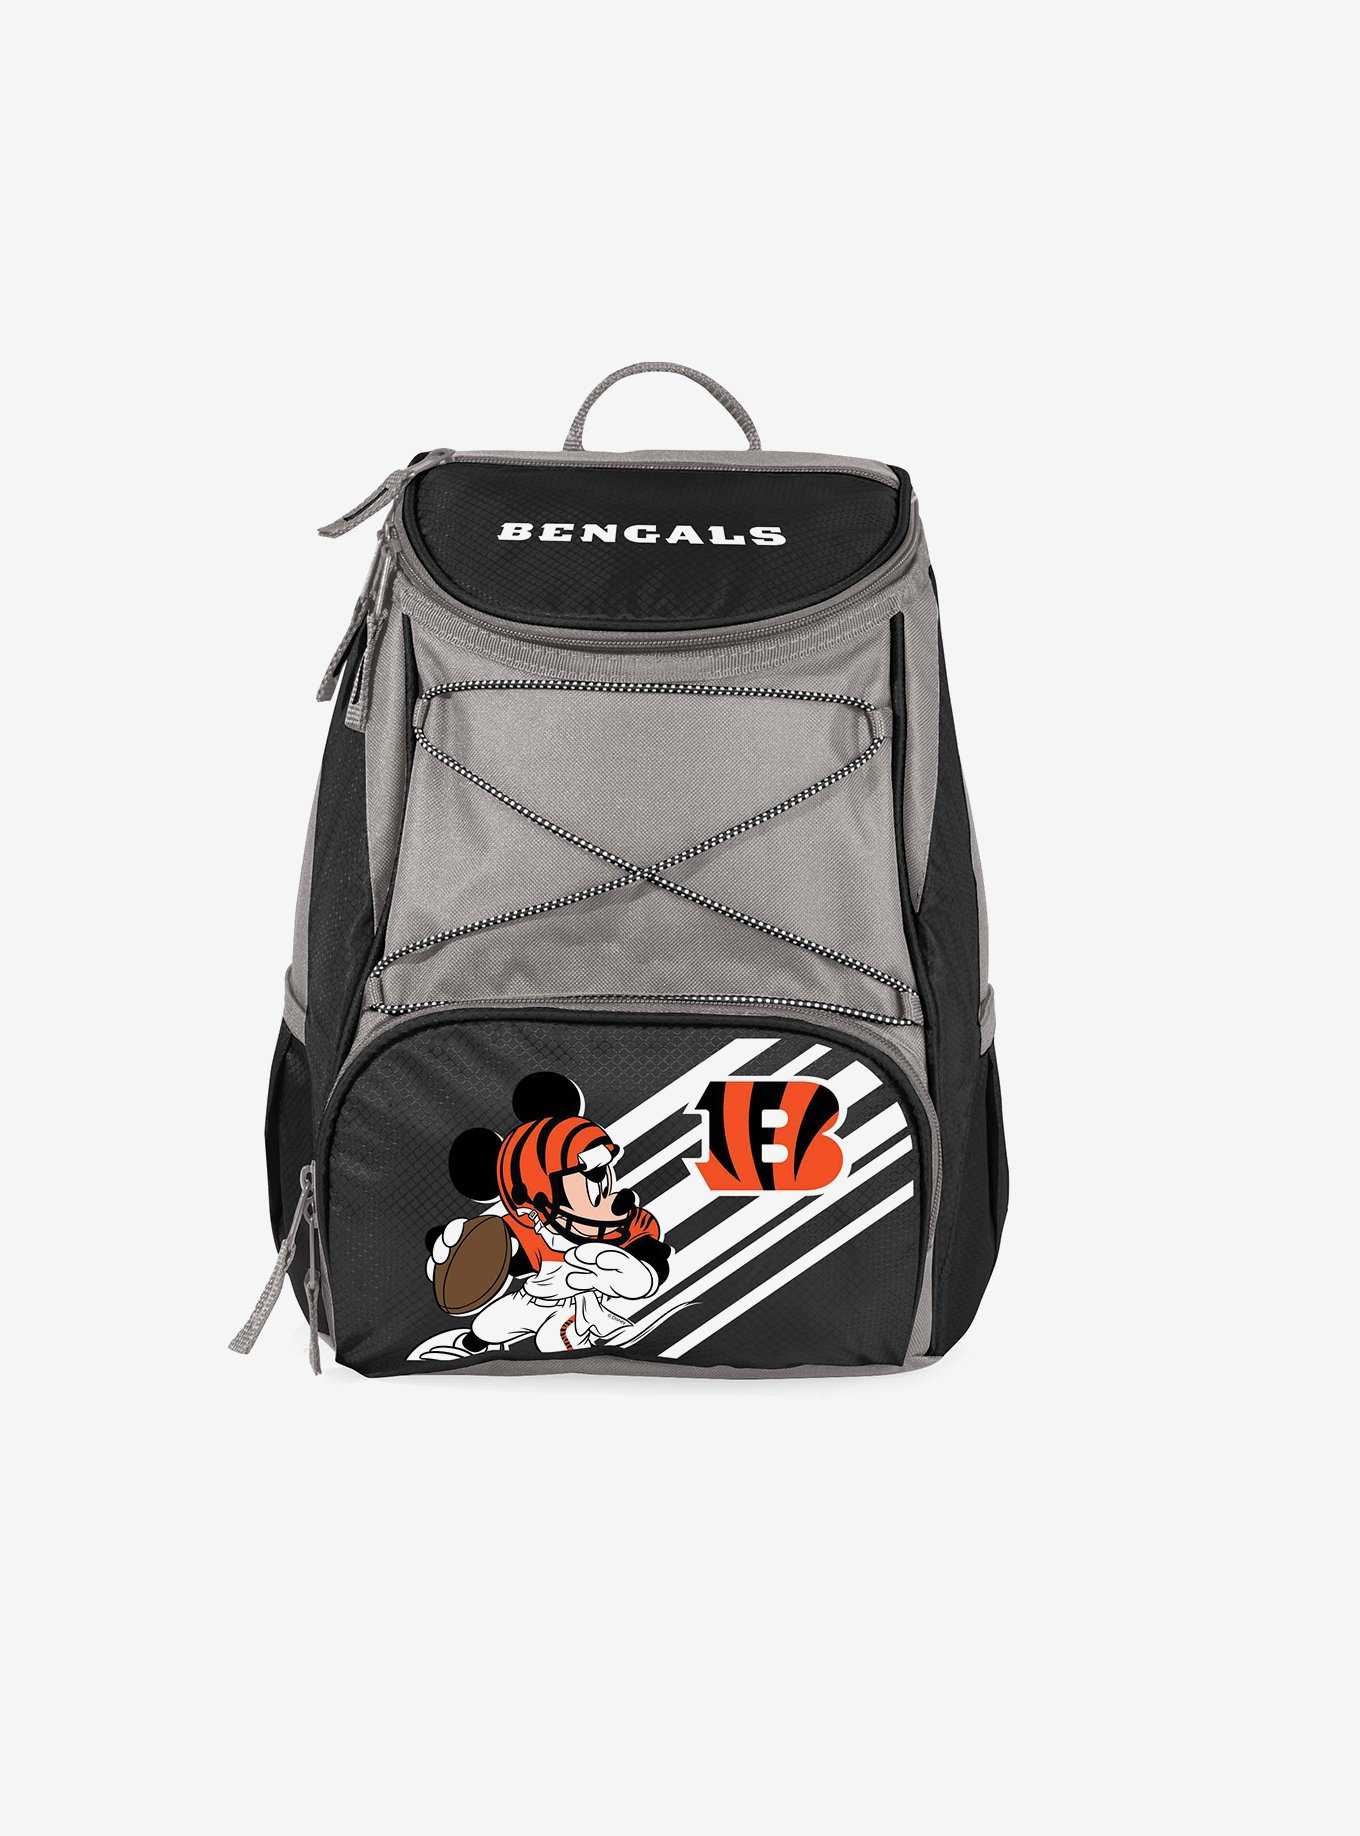 Disney Mickey Mouse NFL Cincinnati Bengals Cooler Backpack, , hi-res